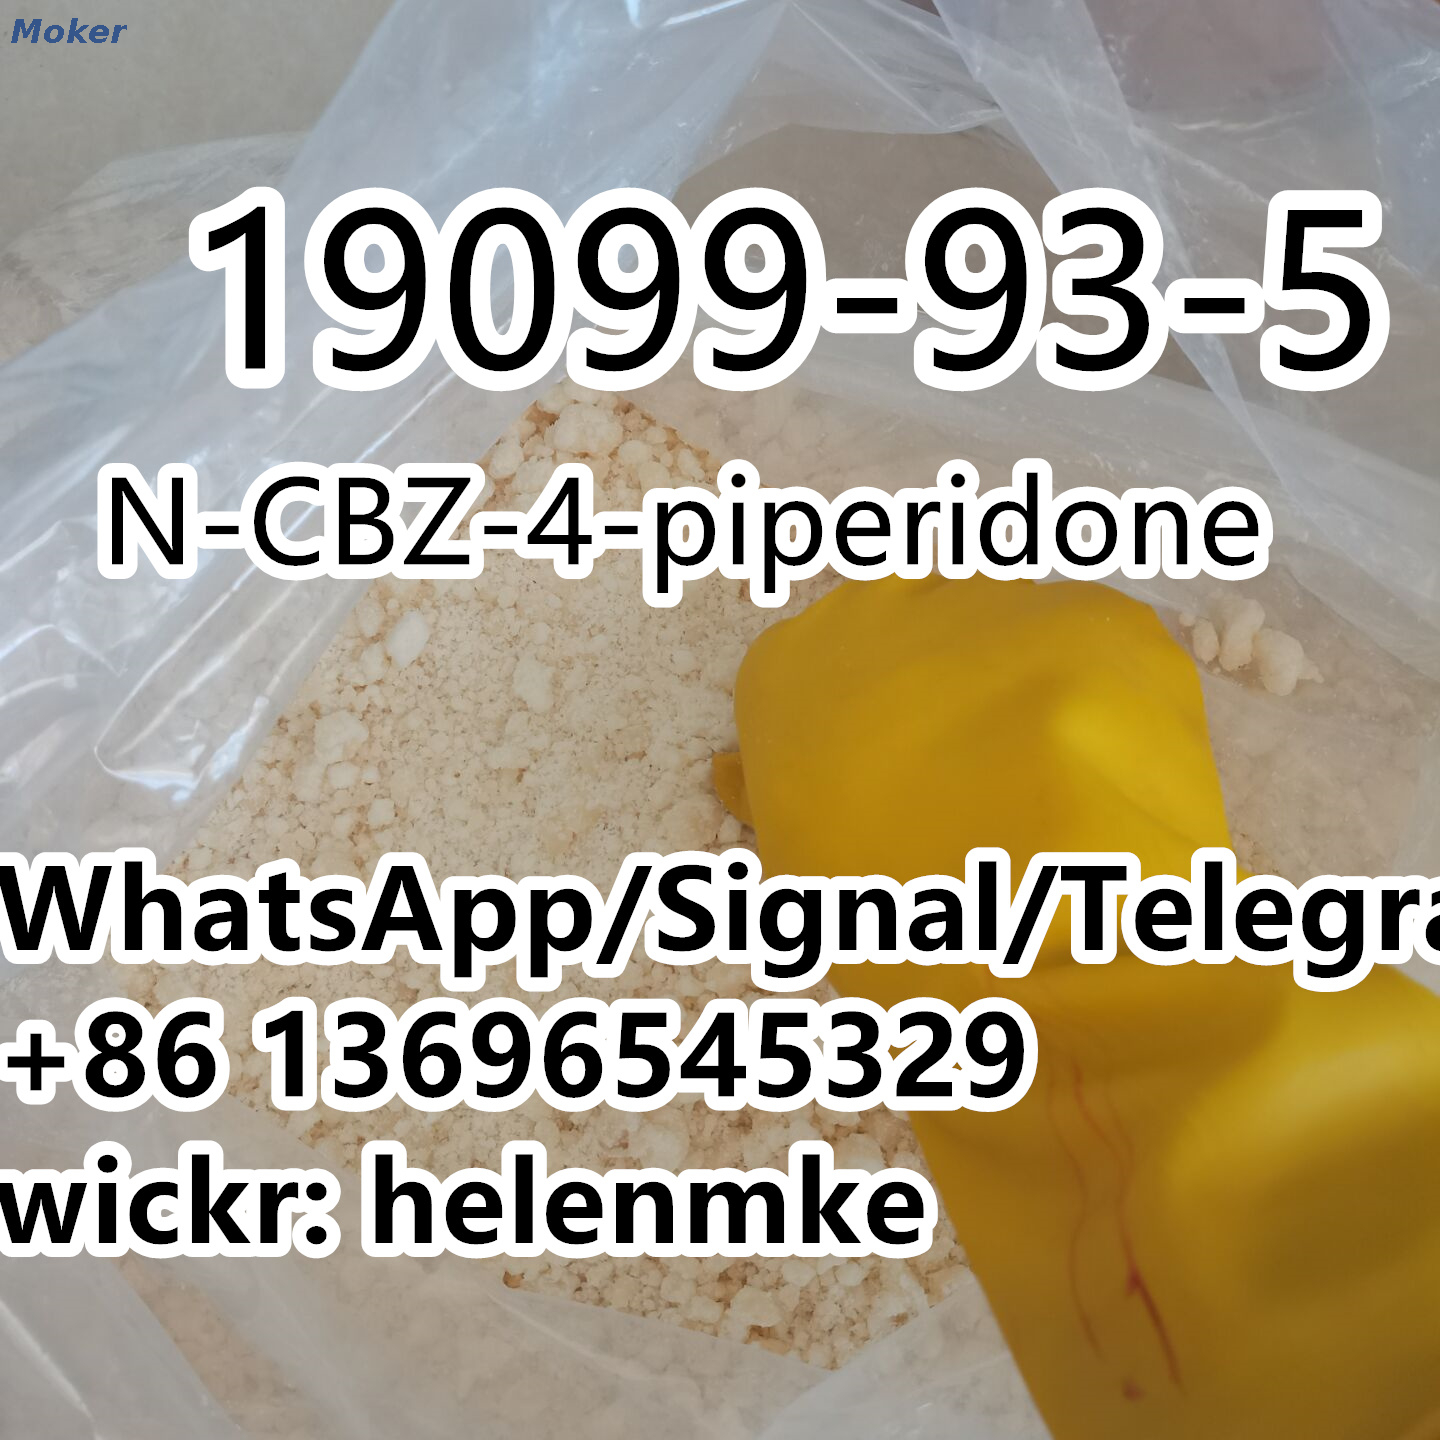 99% Reinheit N-CBZ-4-piperidon CAS 19099-93-5 mit 100% Pass-Zollsicherheit